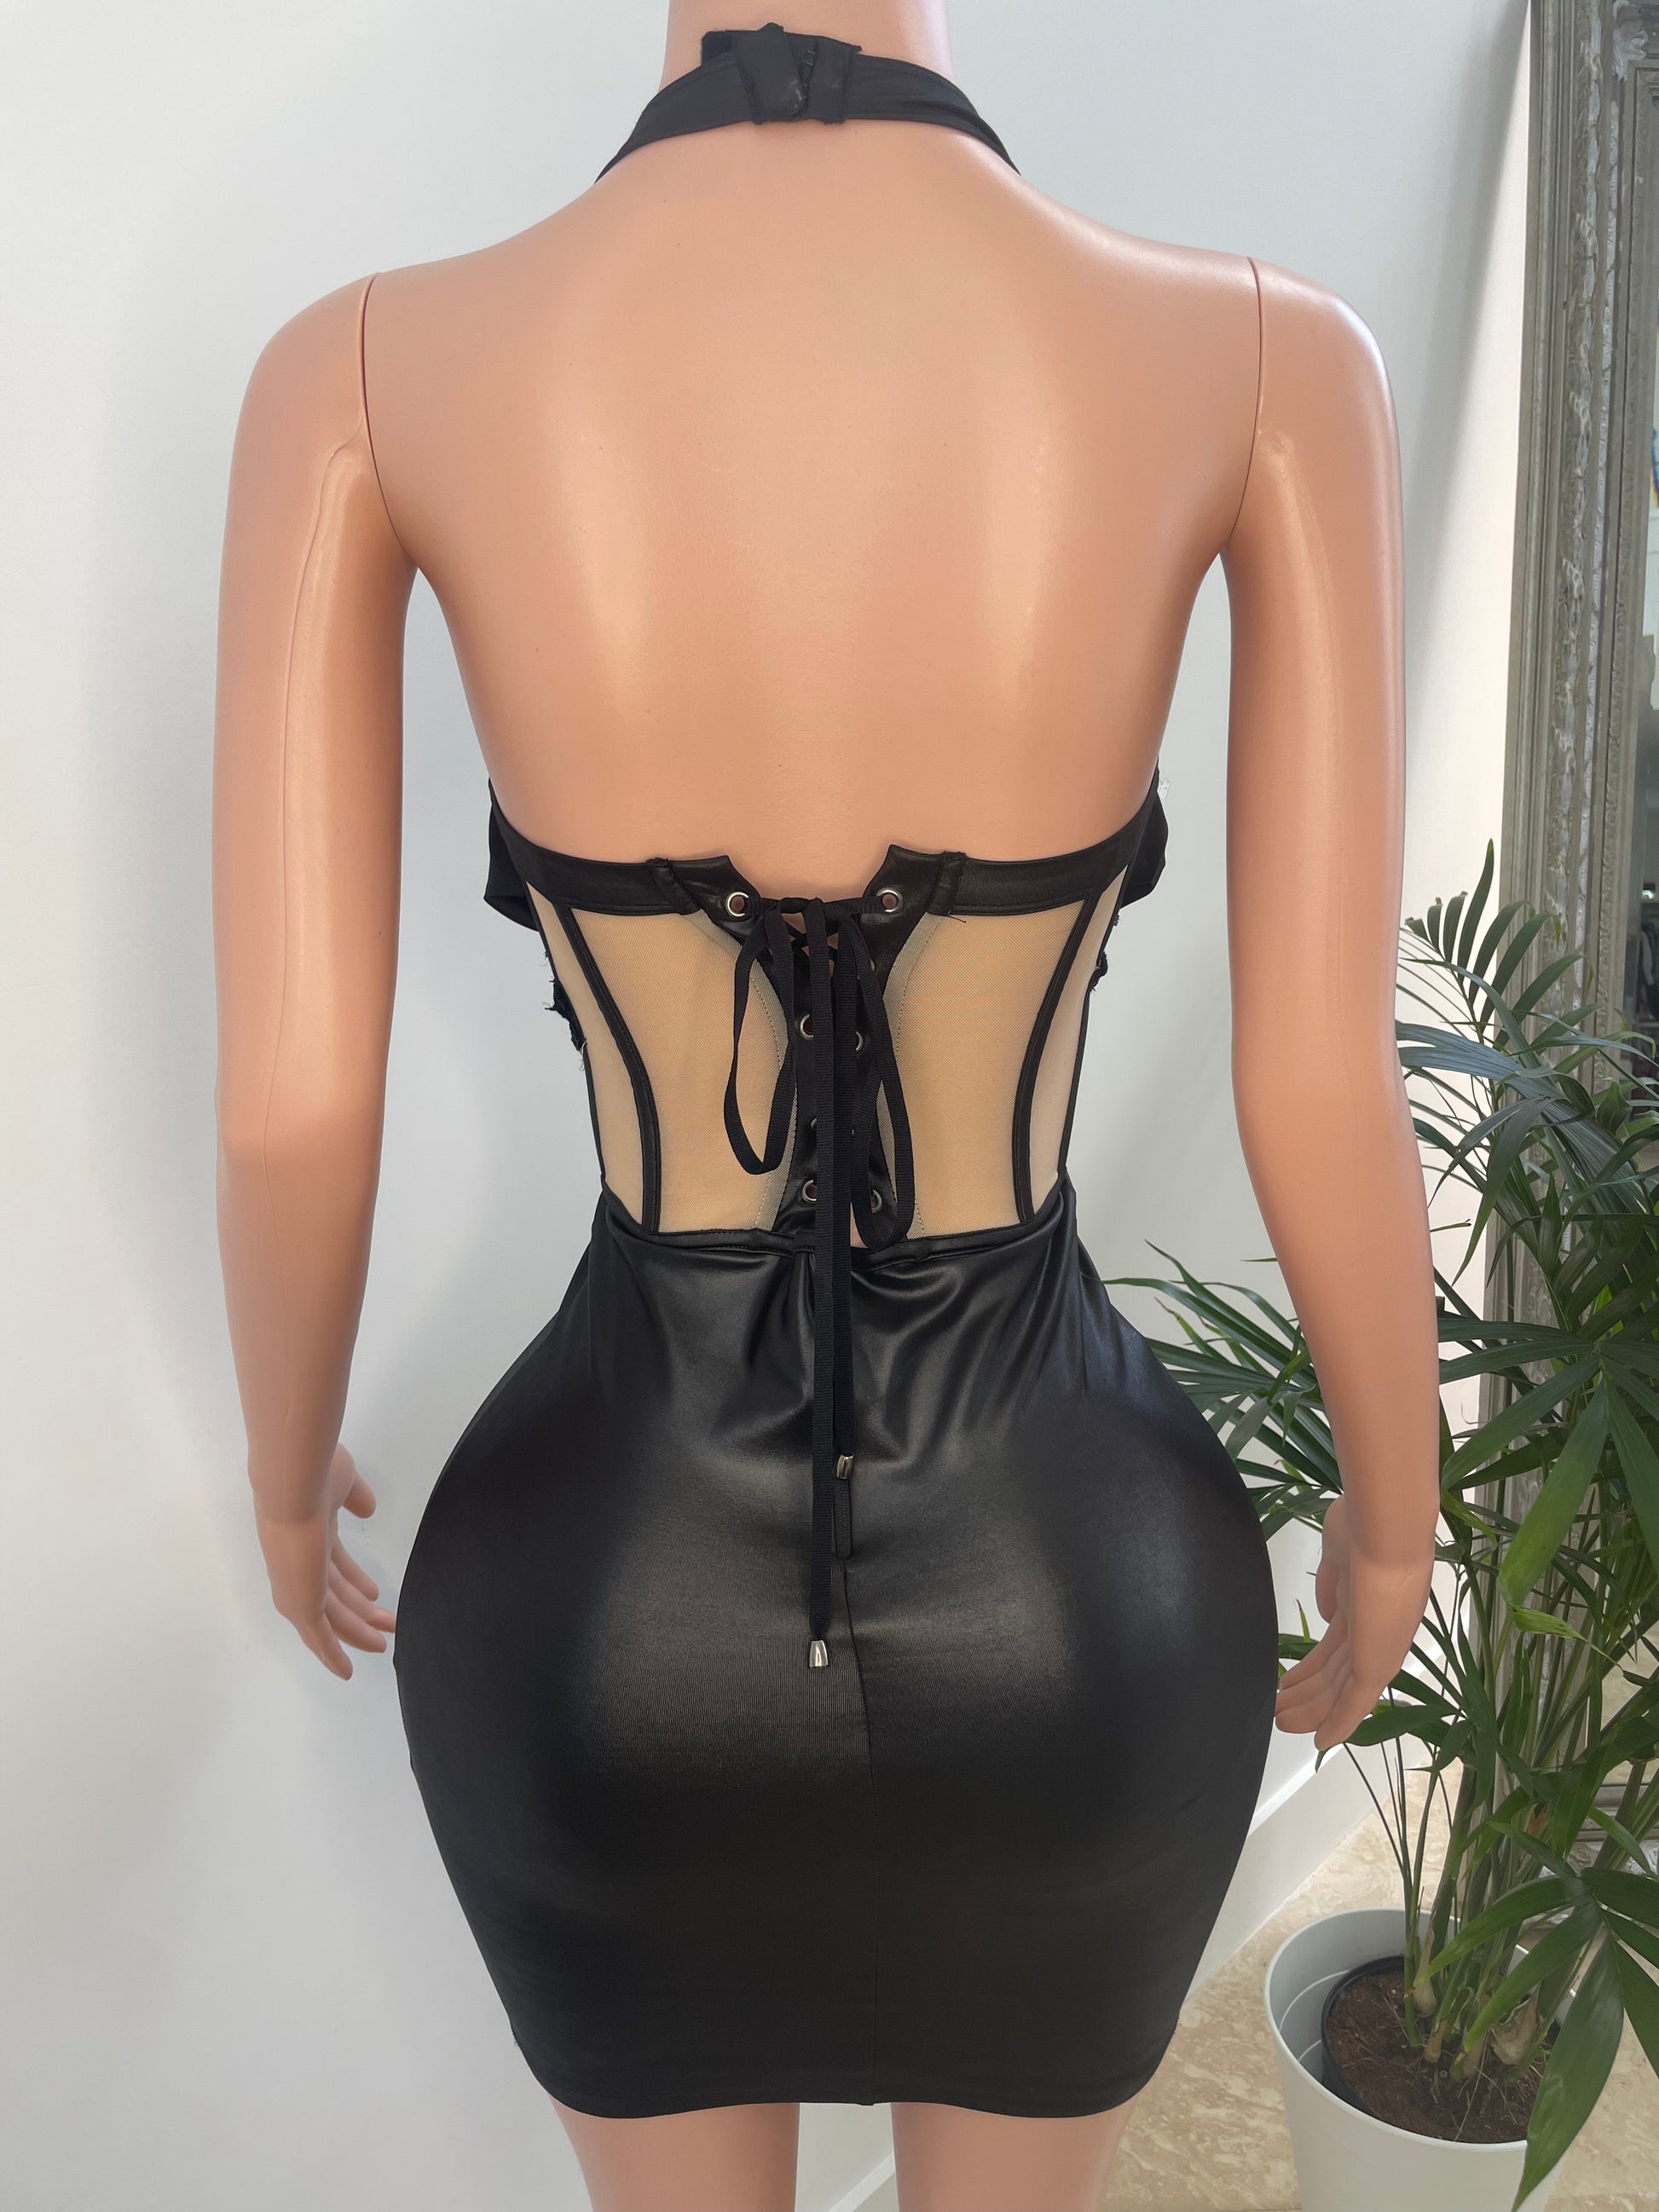 Black lace corset dress - SHOP JAMILA